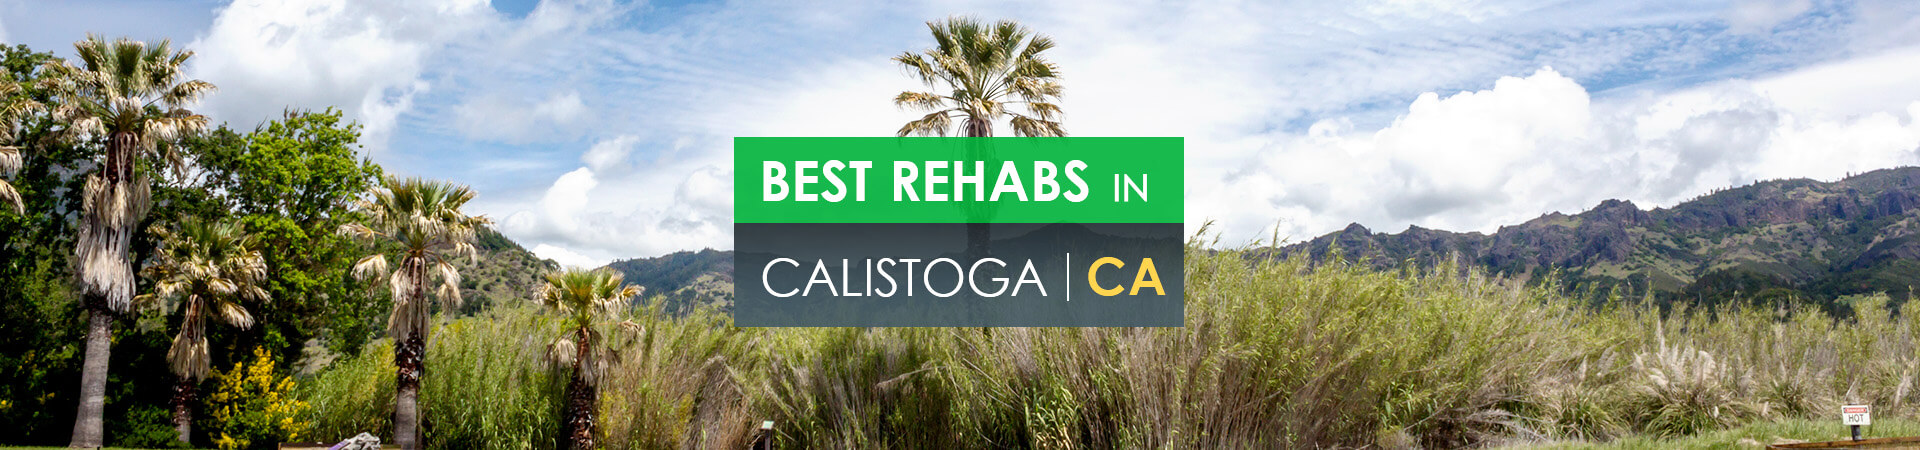 Best rehabs in Calistoga, CA